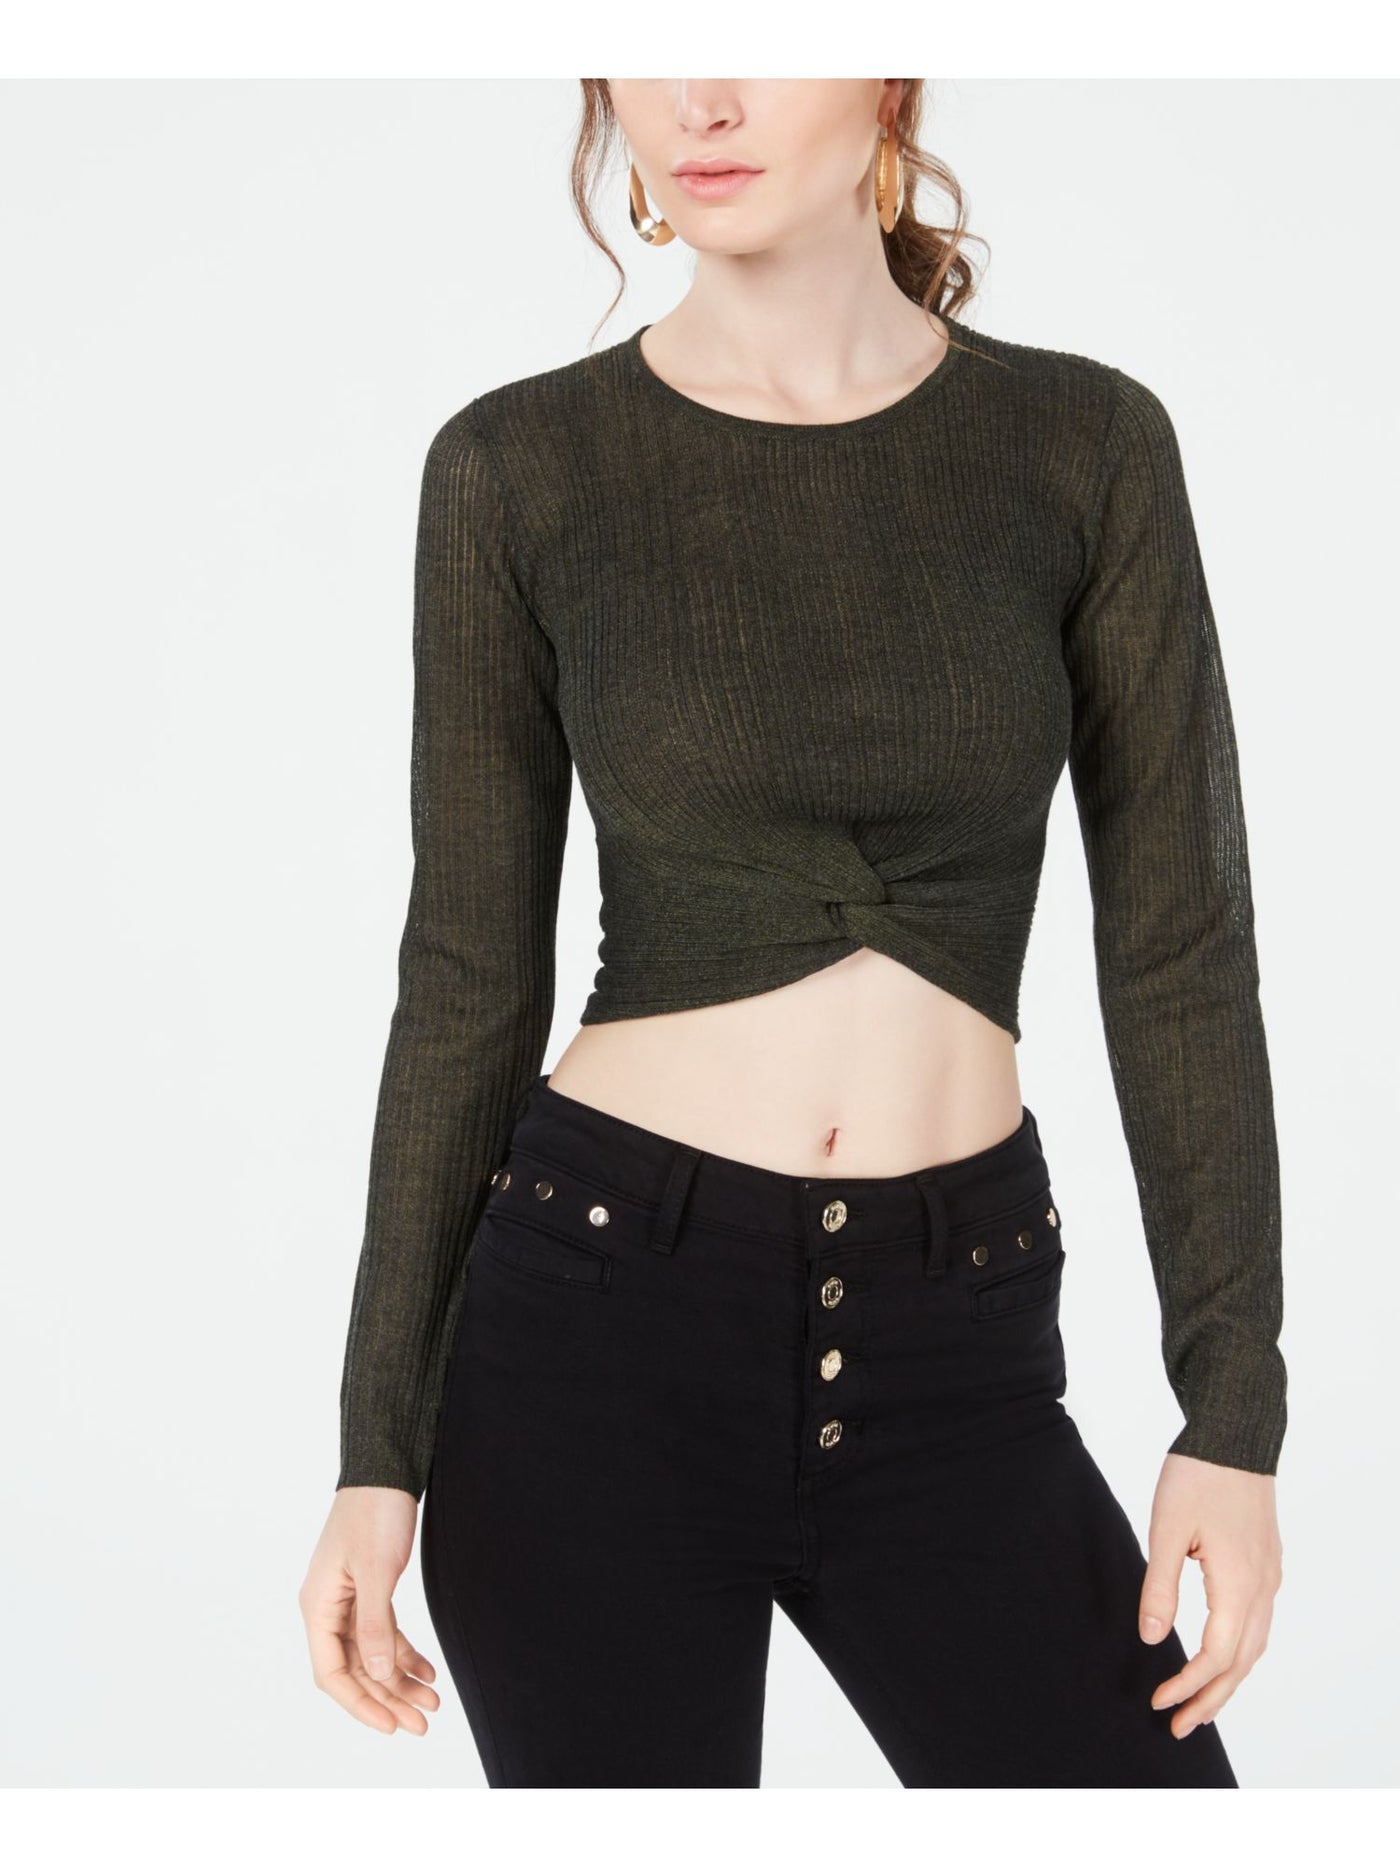 GUESS Womens Green Twist-front Long Sleeve Jewel Neck Crop Top Size: XL